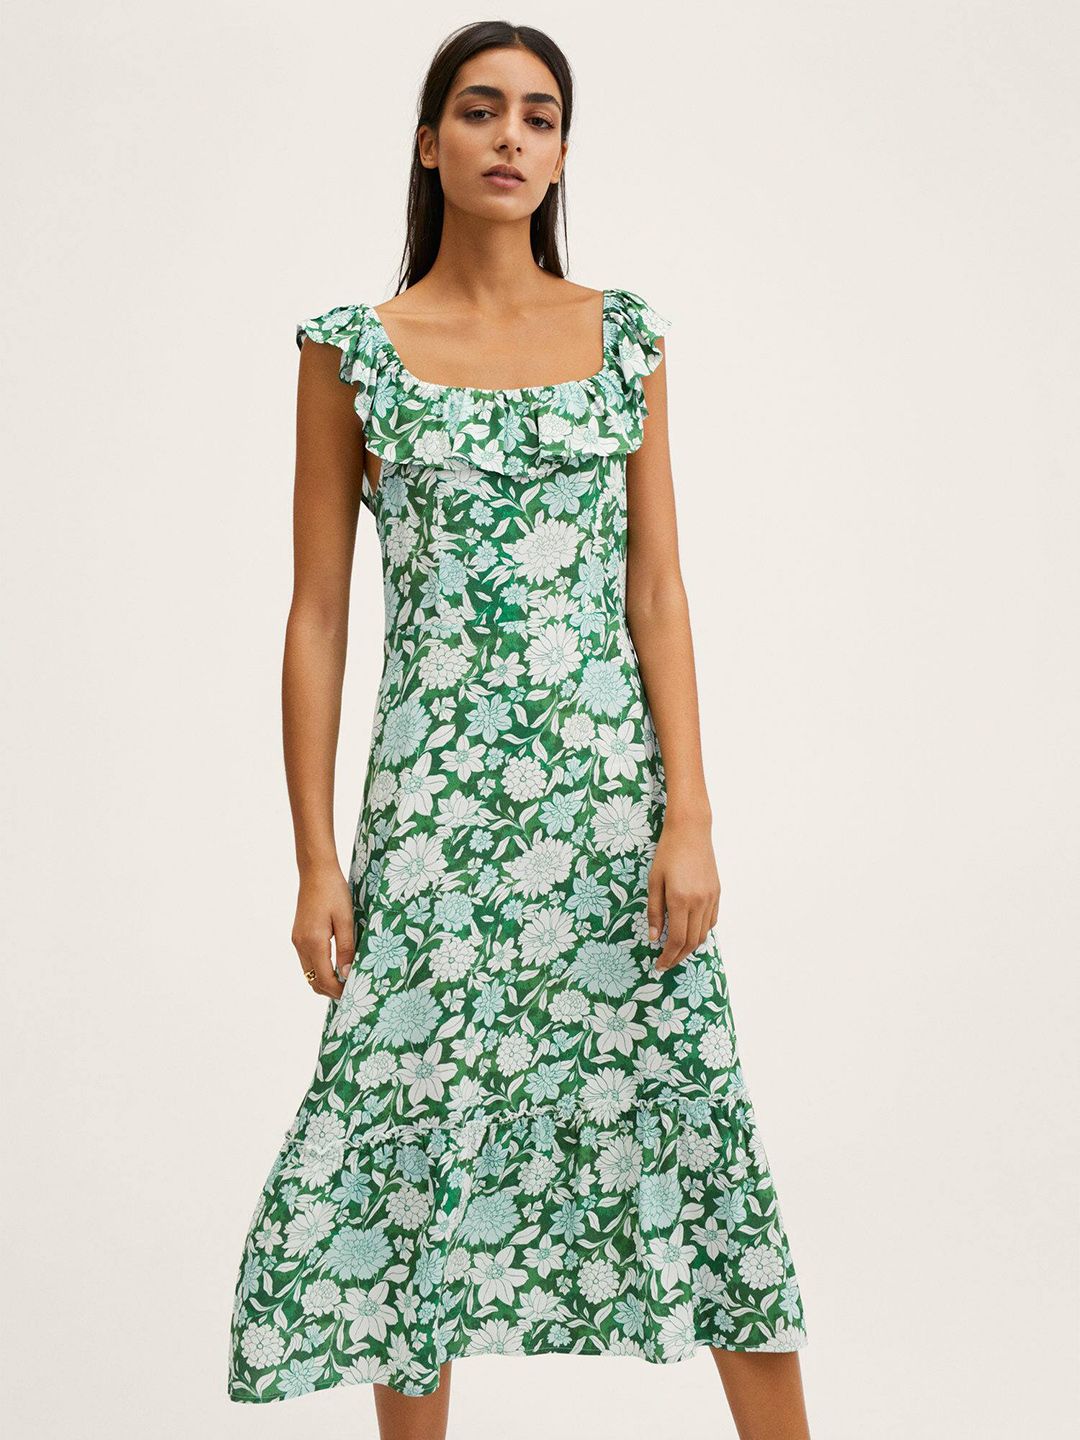 MANGO Women Green & White Floral A-Line Midi Dress Price in India